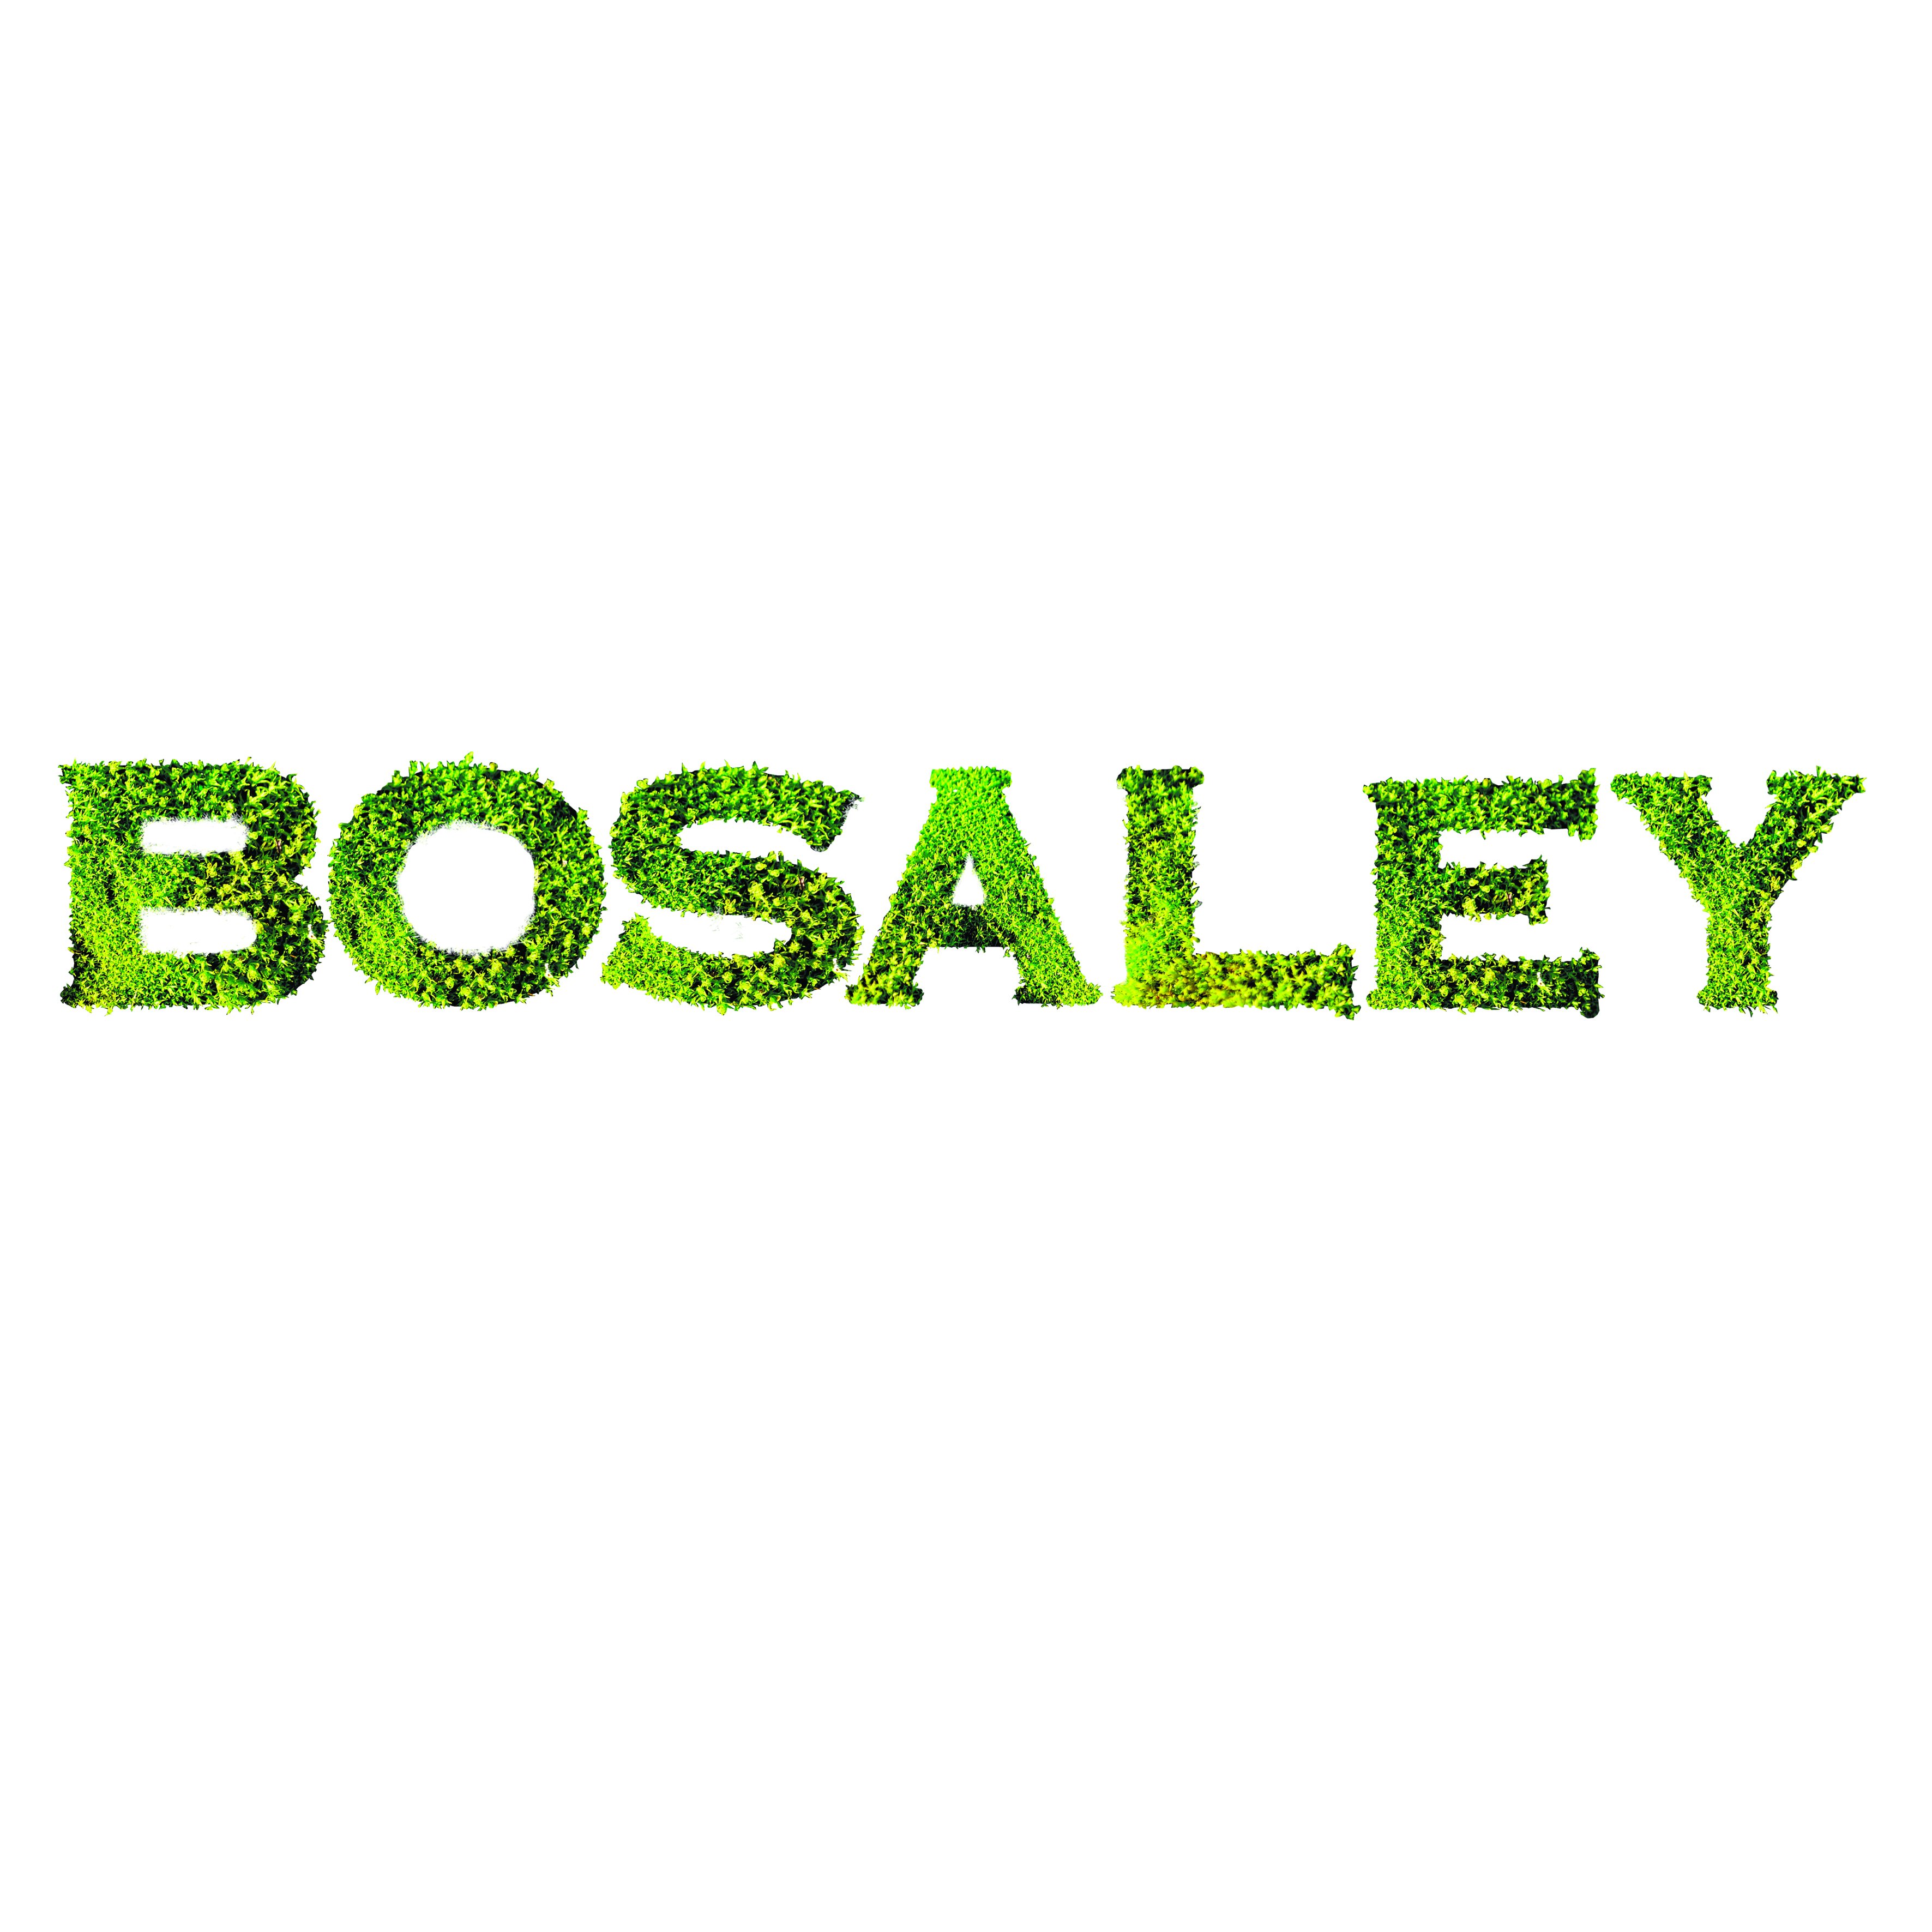 (Закрыт) Ресторан Босалей / BOSALEY Lounge Cafe